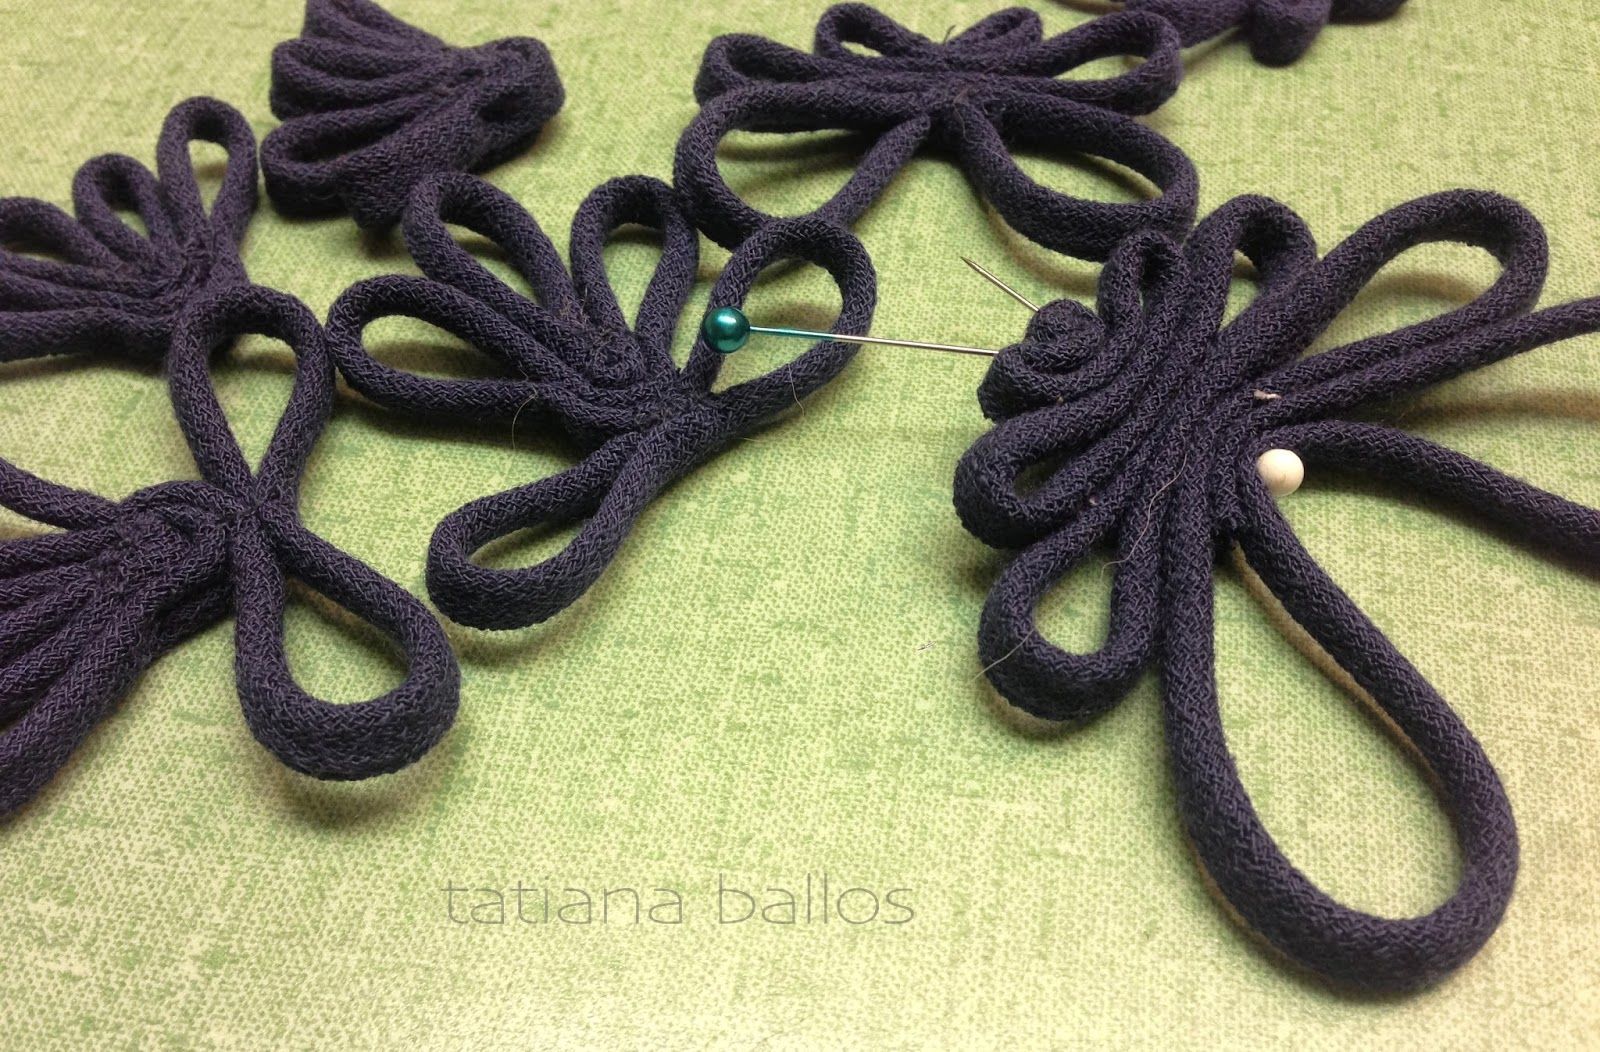 Цветок из шнурка: Видео мастер класс вяжем крючком цветок из шнура | Anna Gri Crochet